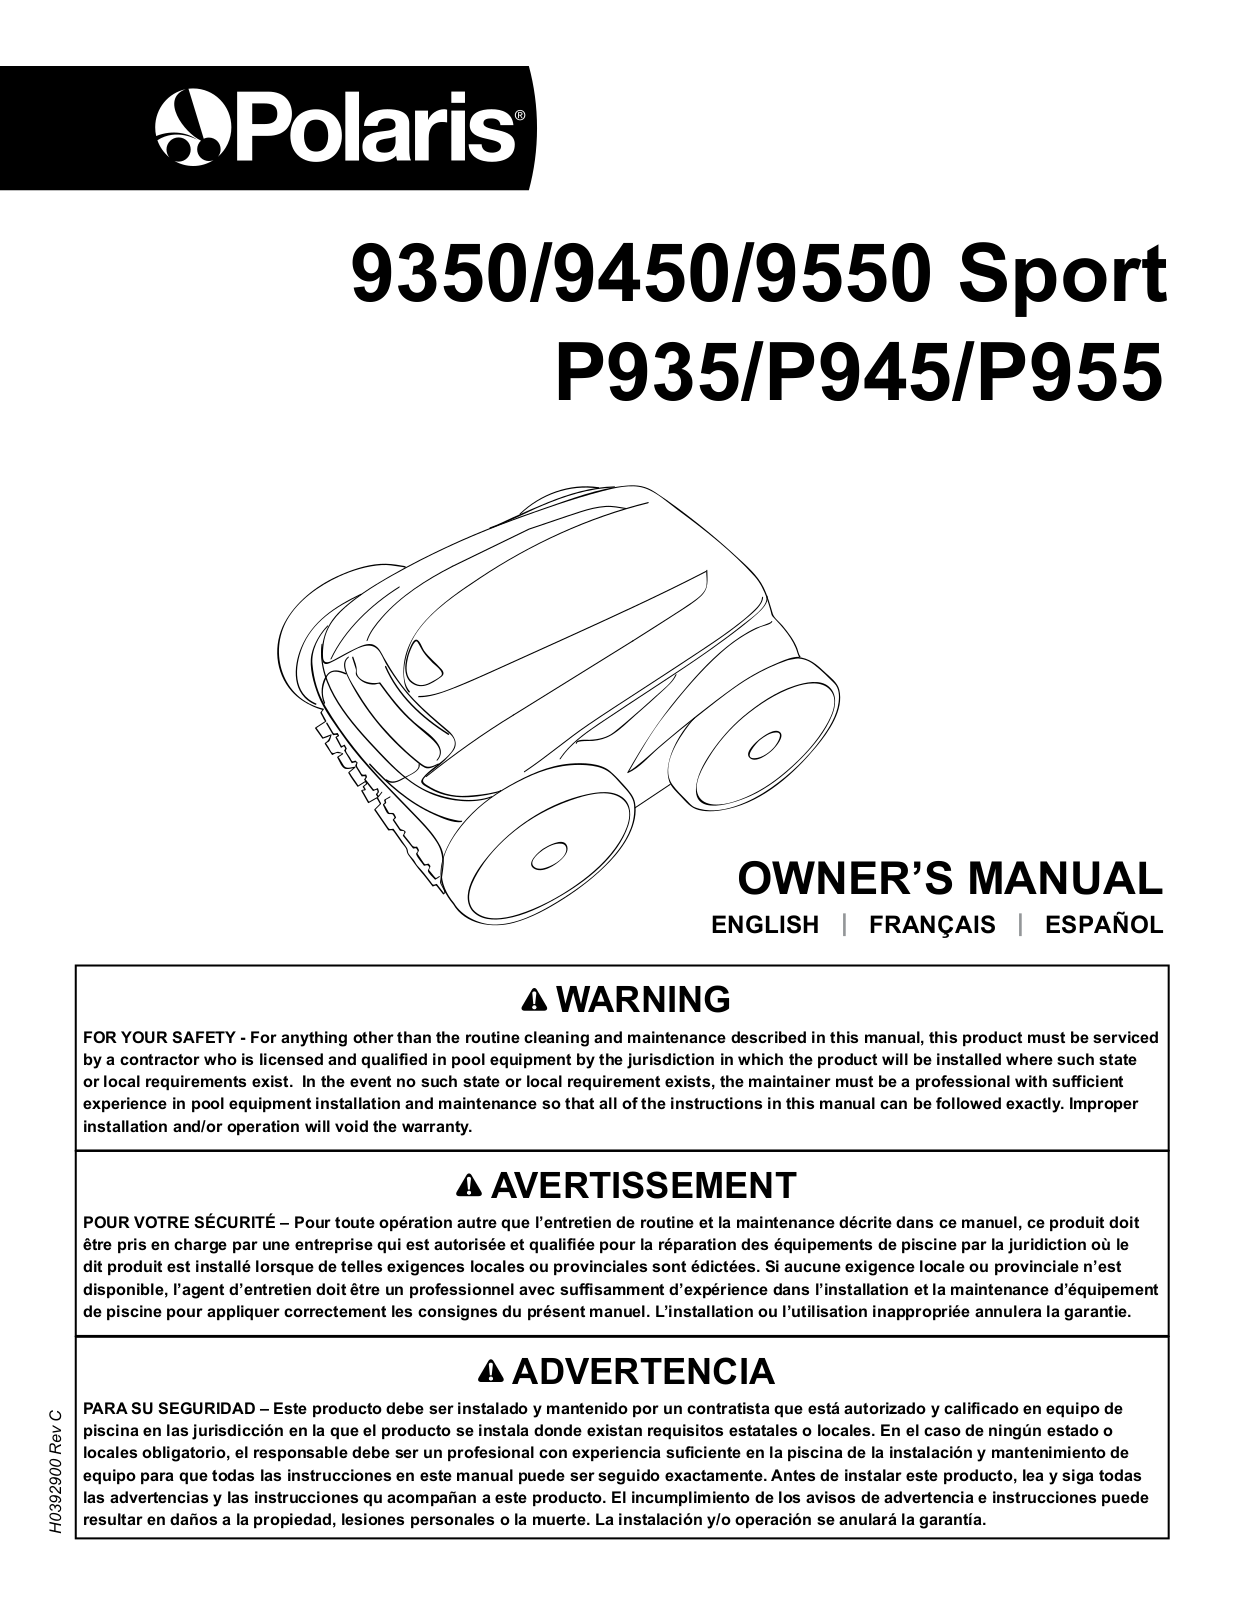 Polaris 9450 Sport, 9550 Sport, 9350 Sport Owner's Manual